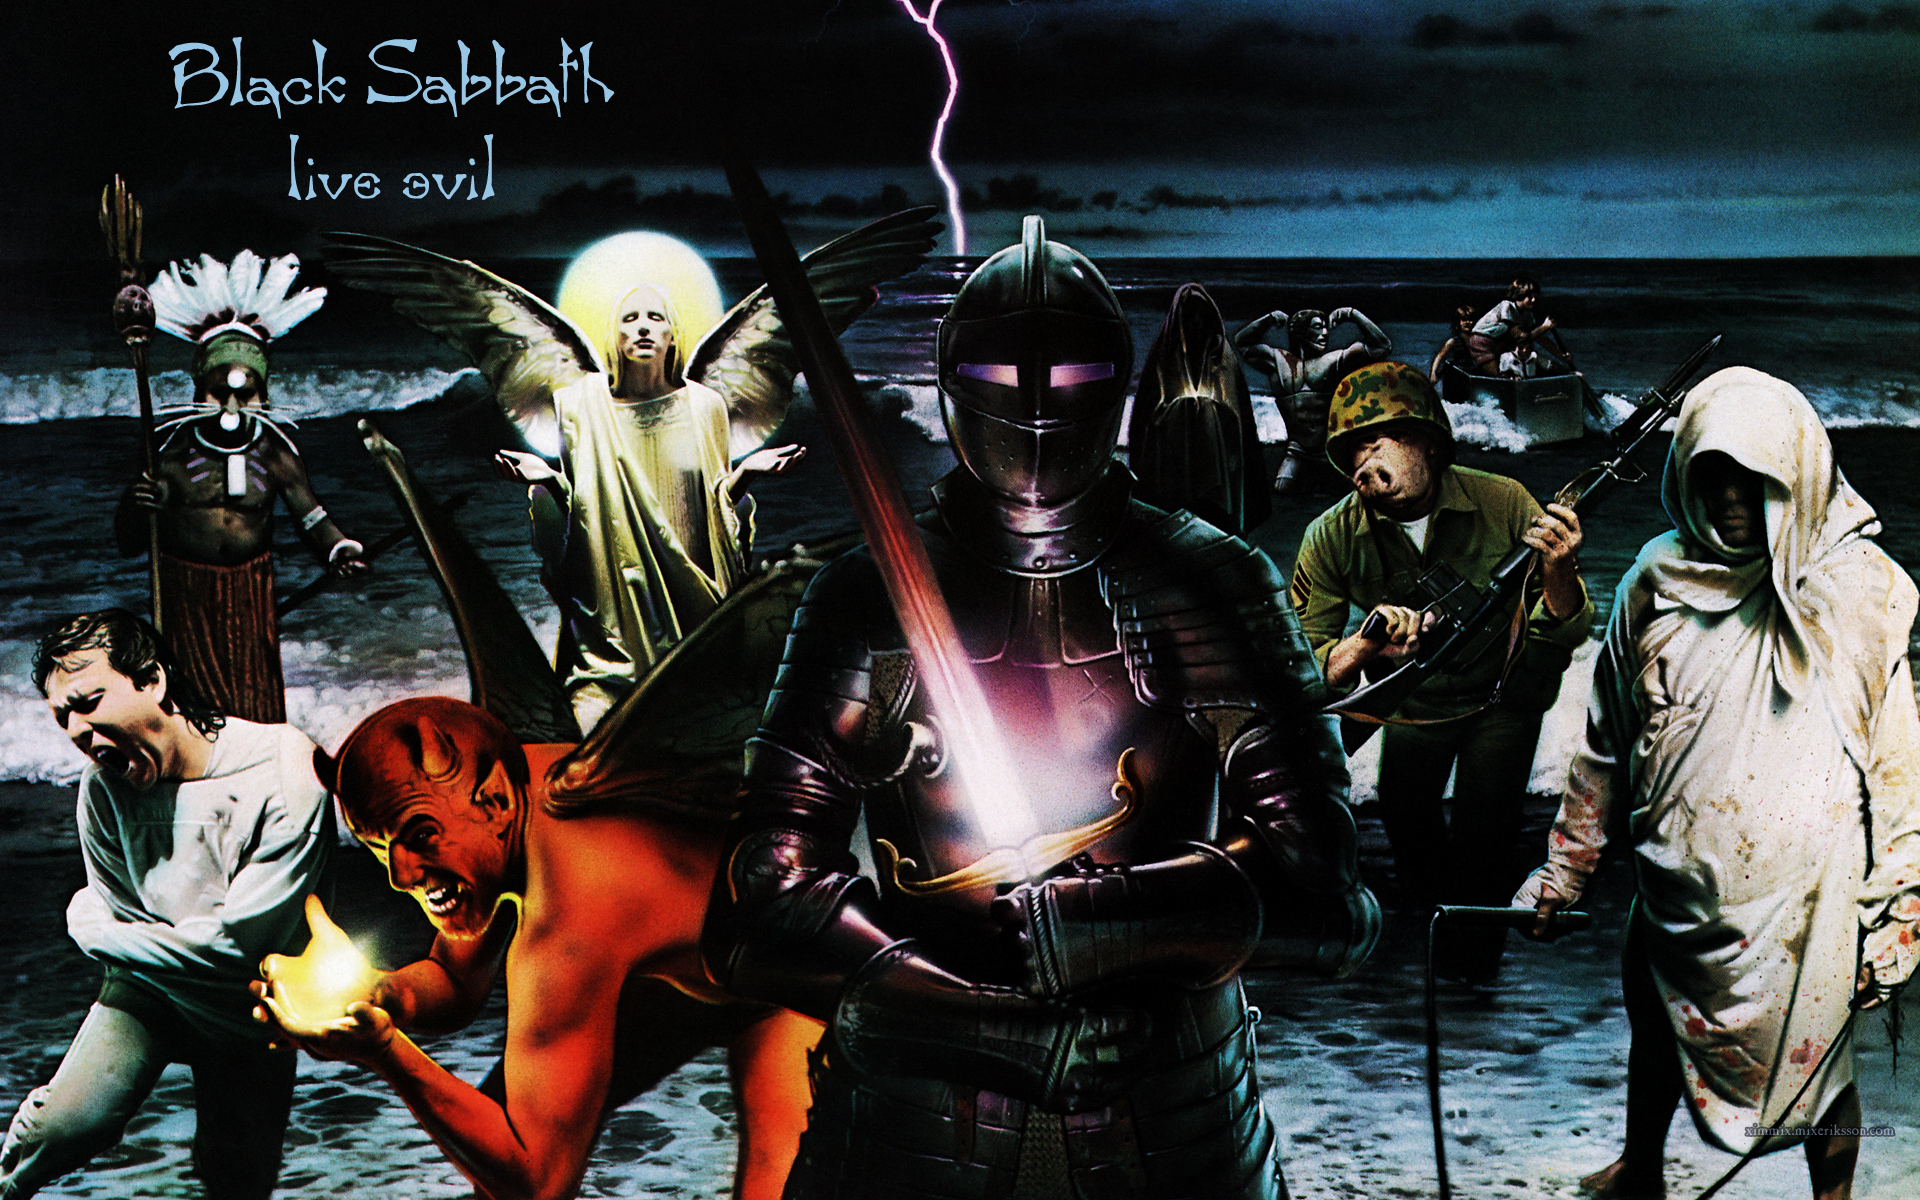 hard rock, black sabbath, music, album cover, heavy metal